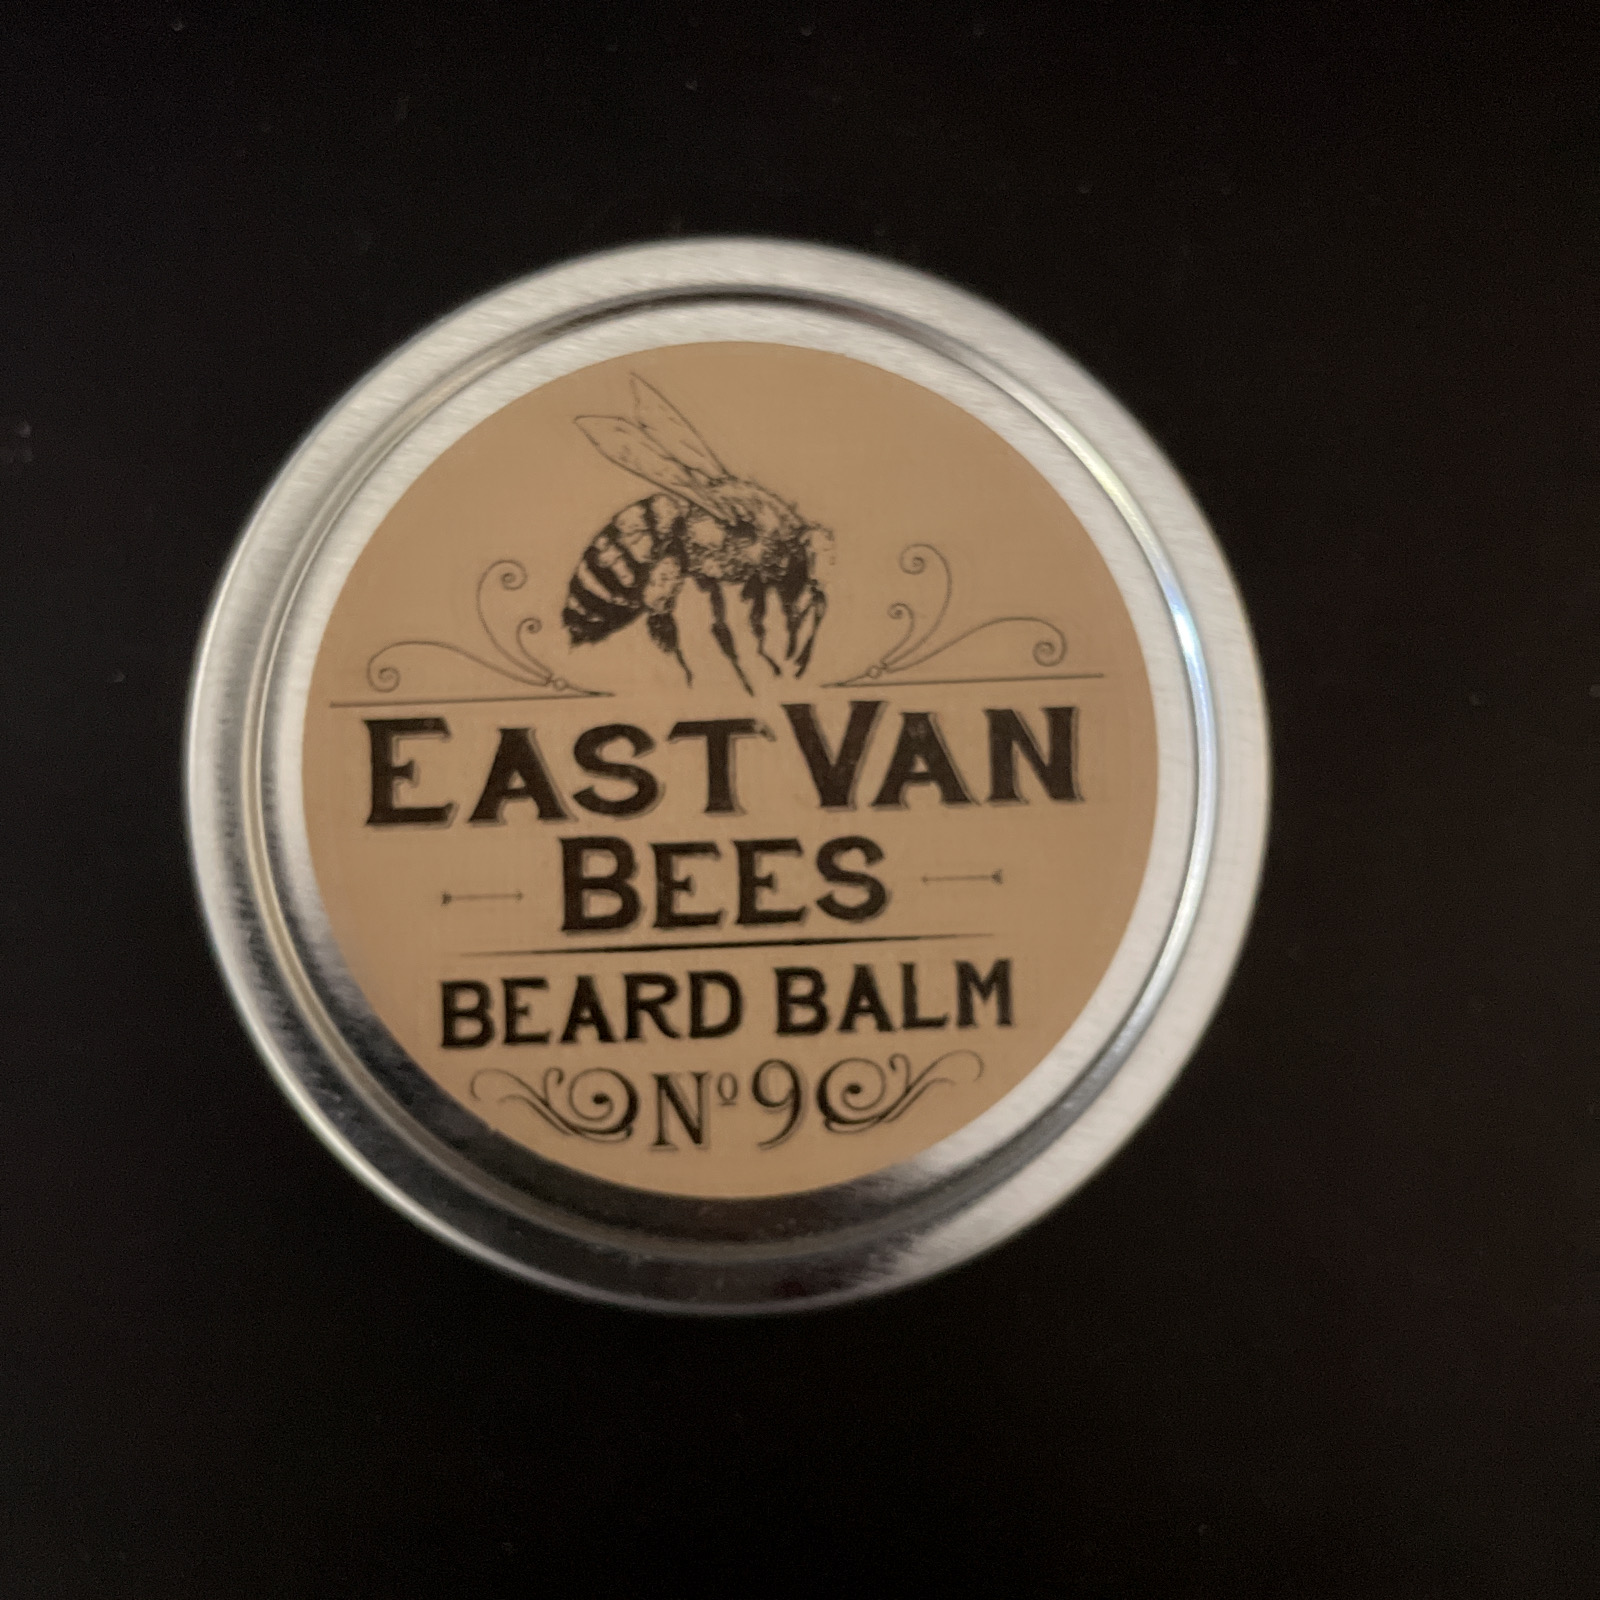 East Van Bees: Beard Balm